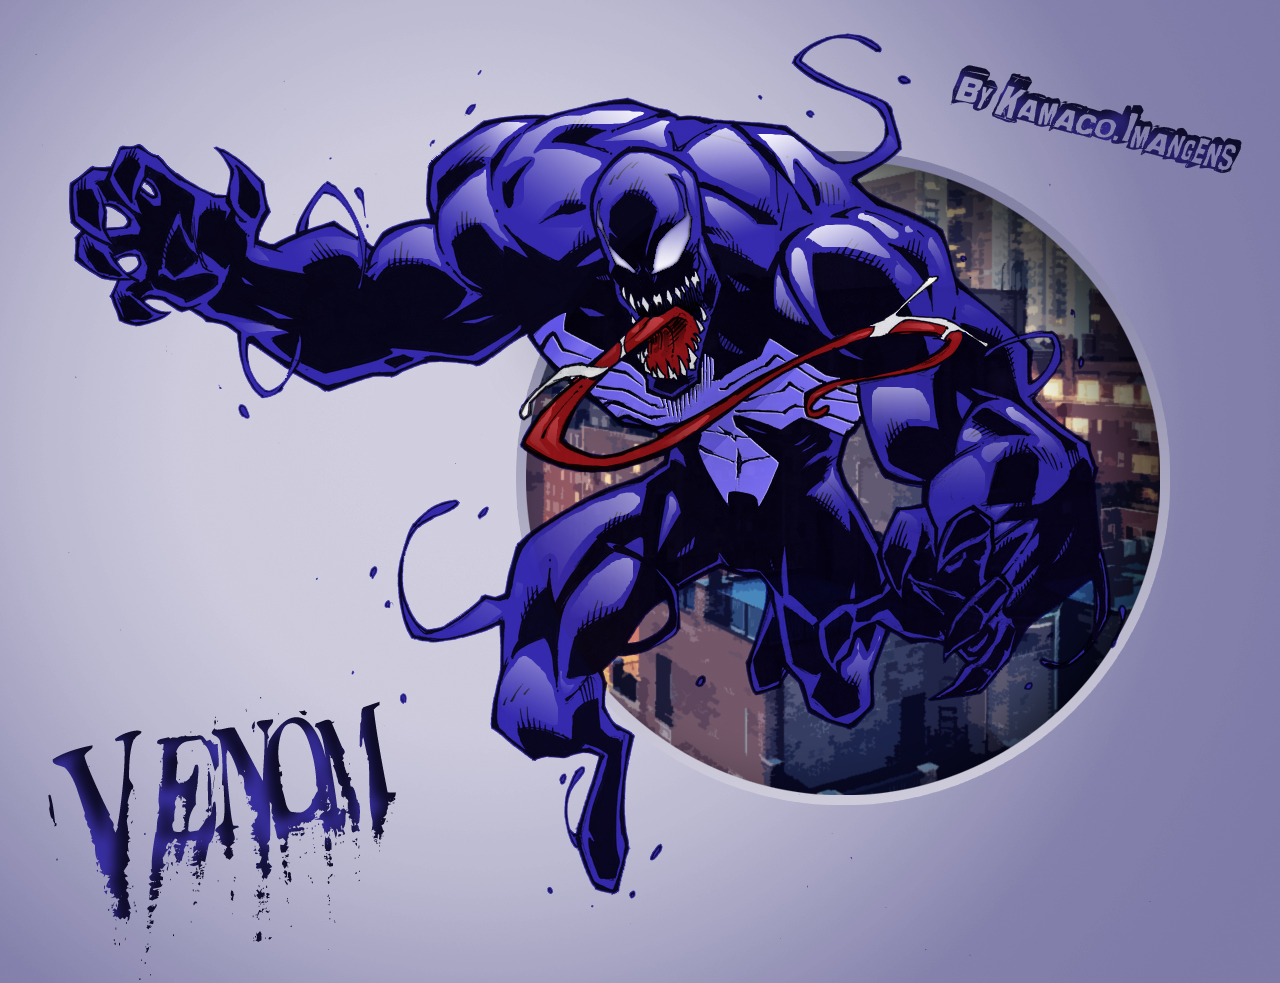 General 1280x983 photoshopped Venom drawing Spider-Man